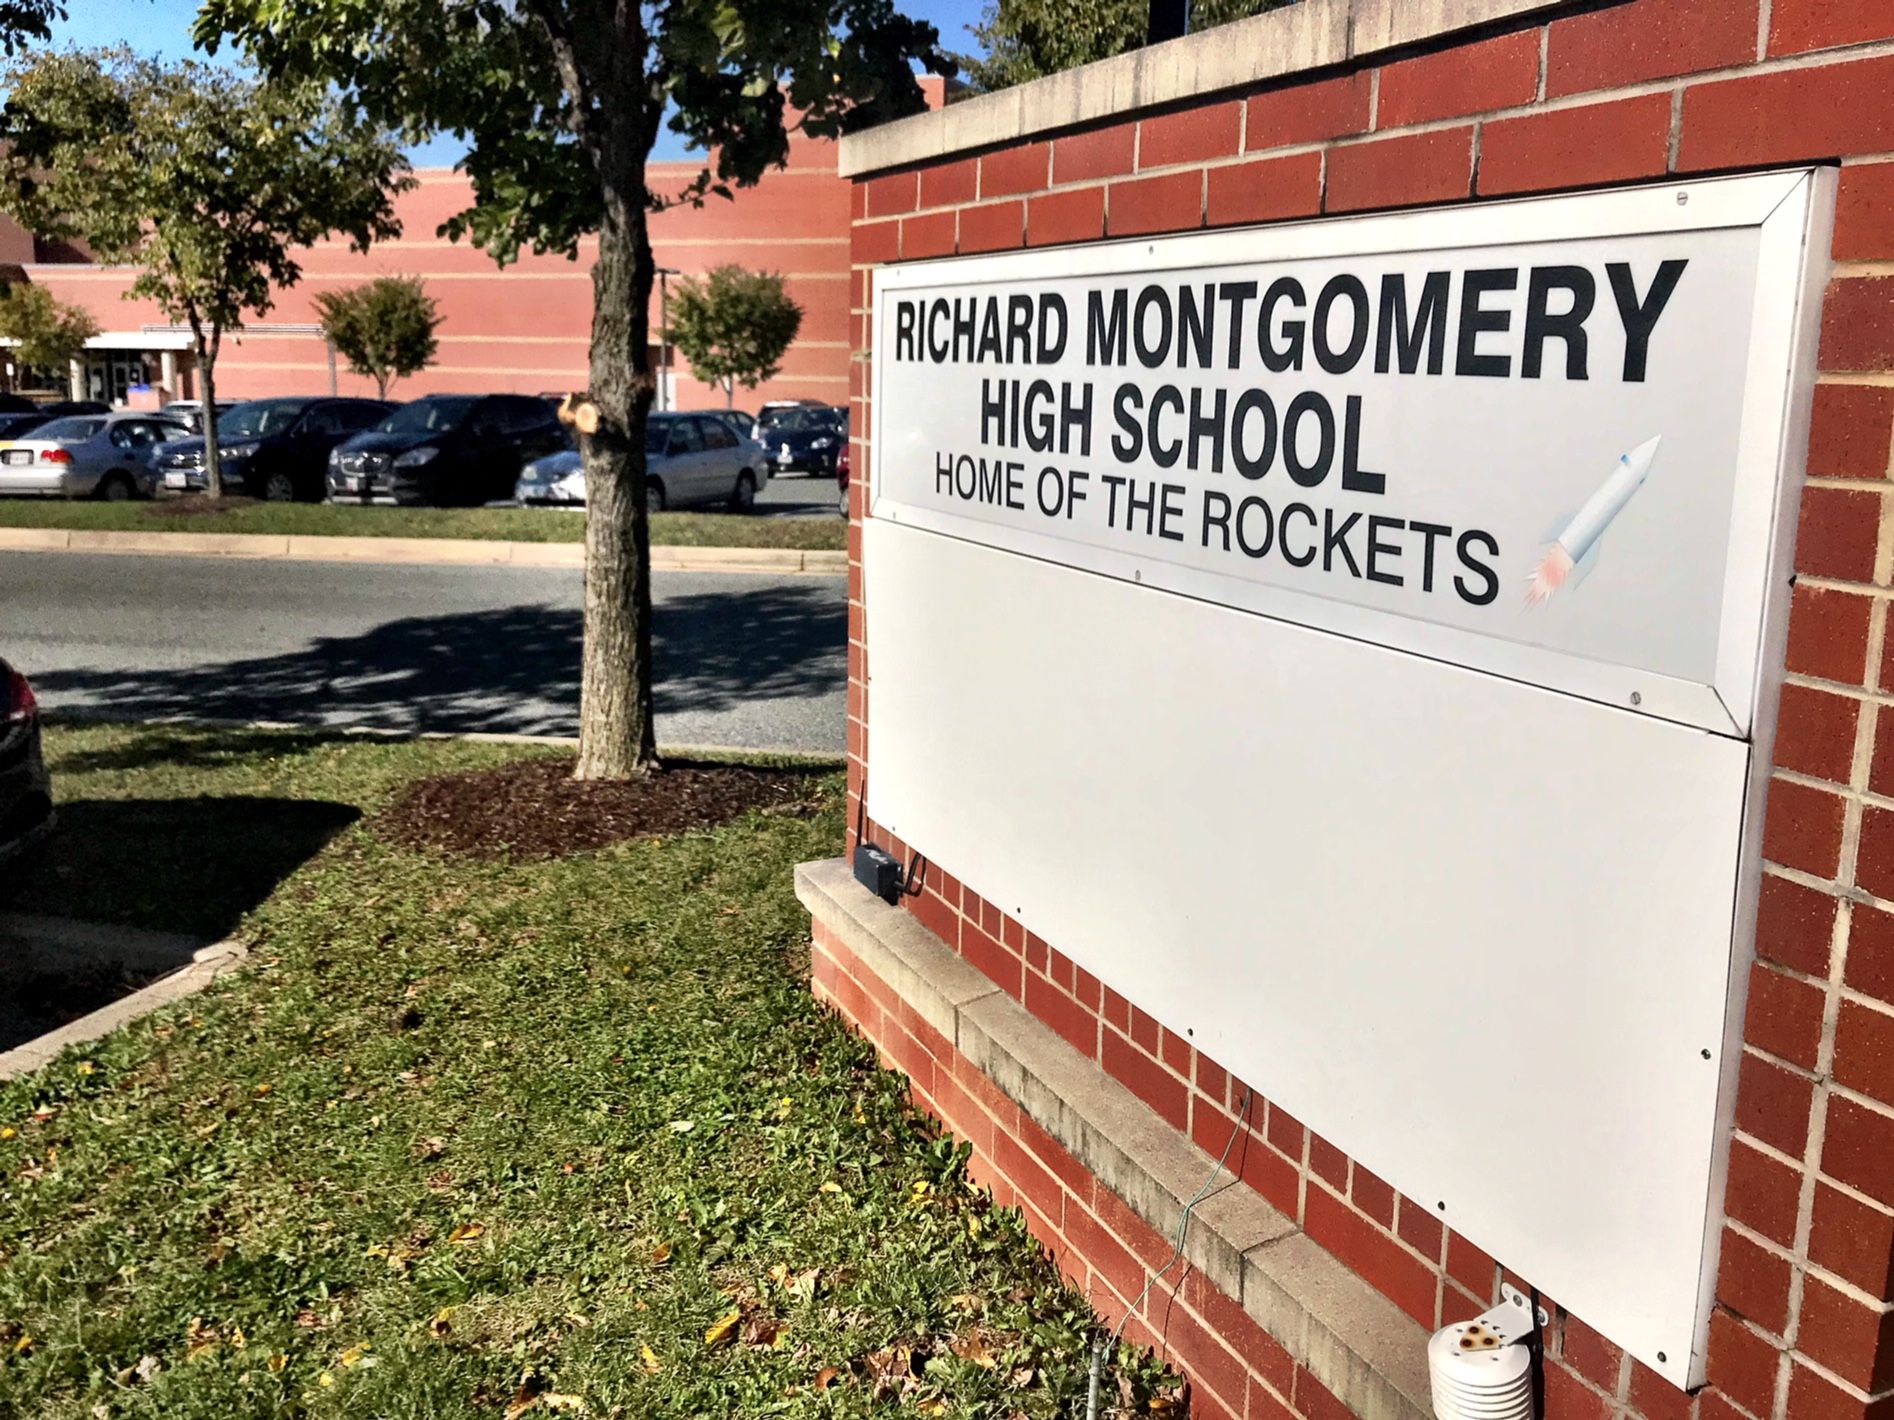 montgomery township school district great schools rating